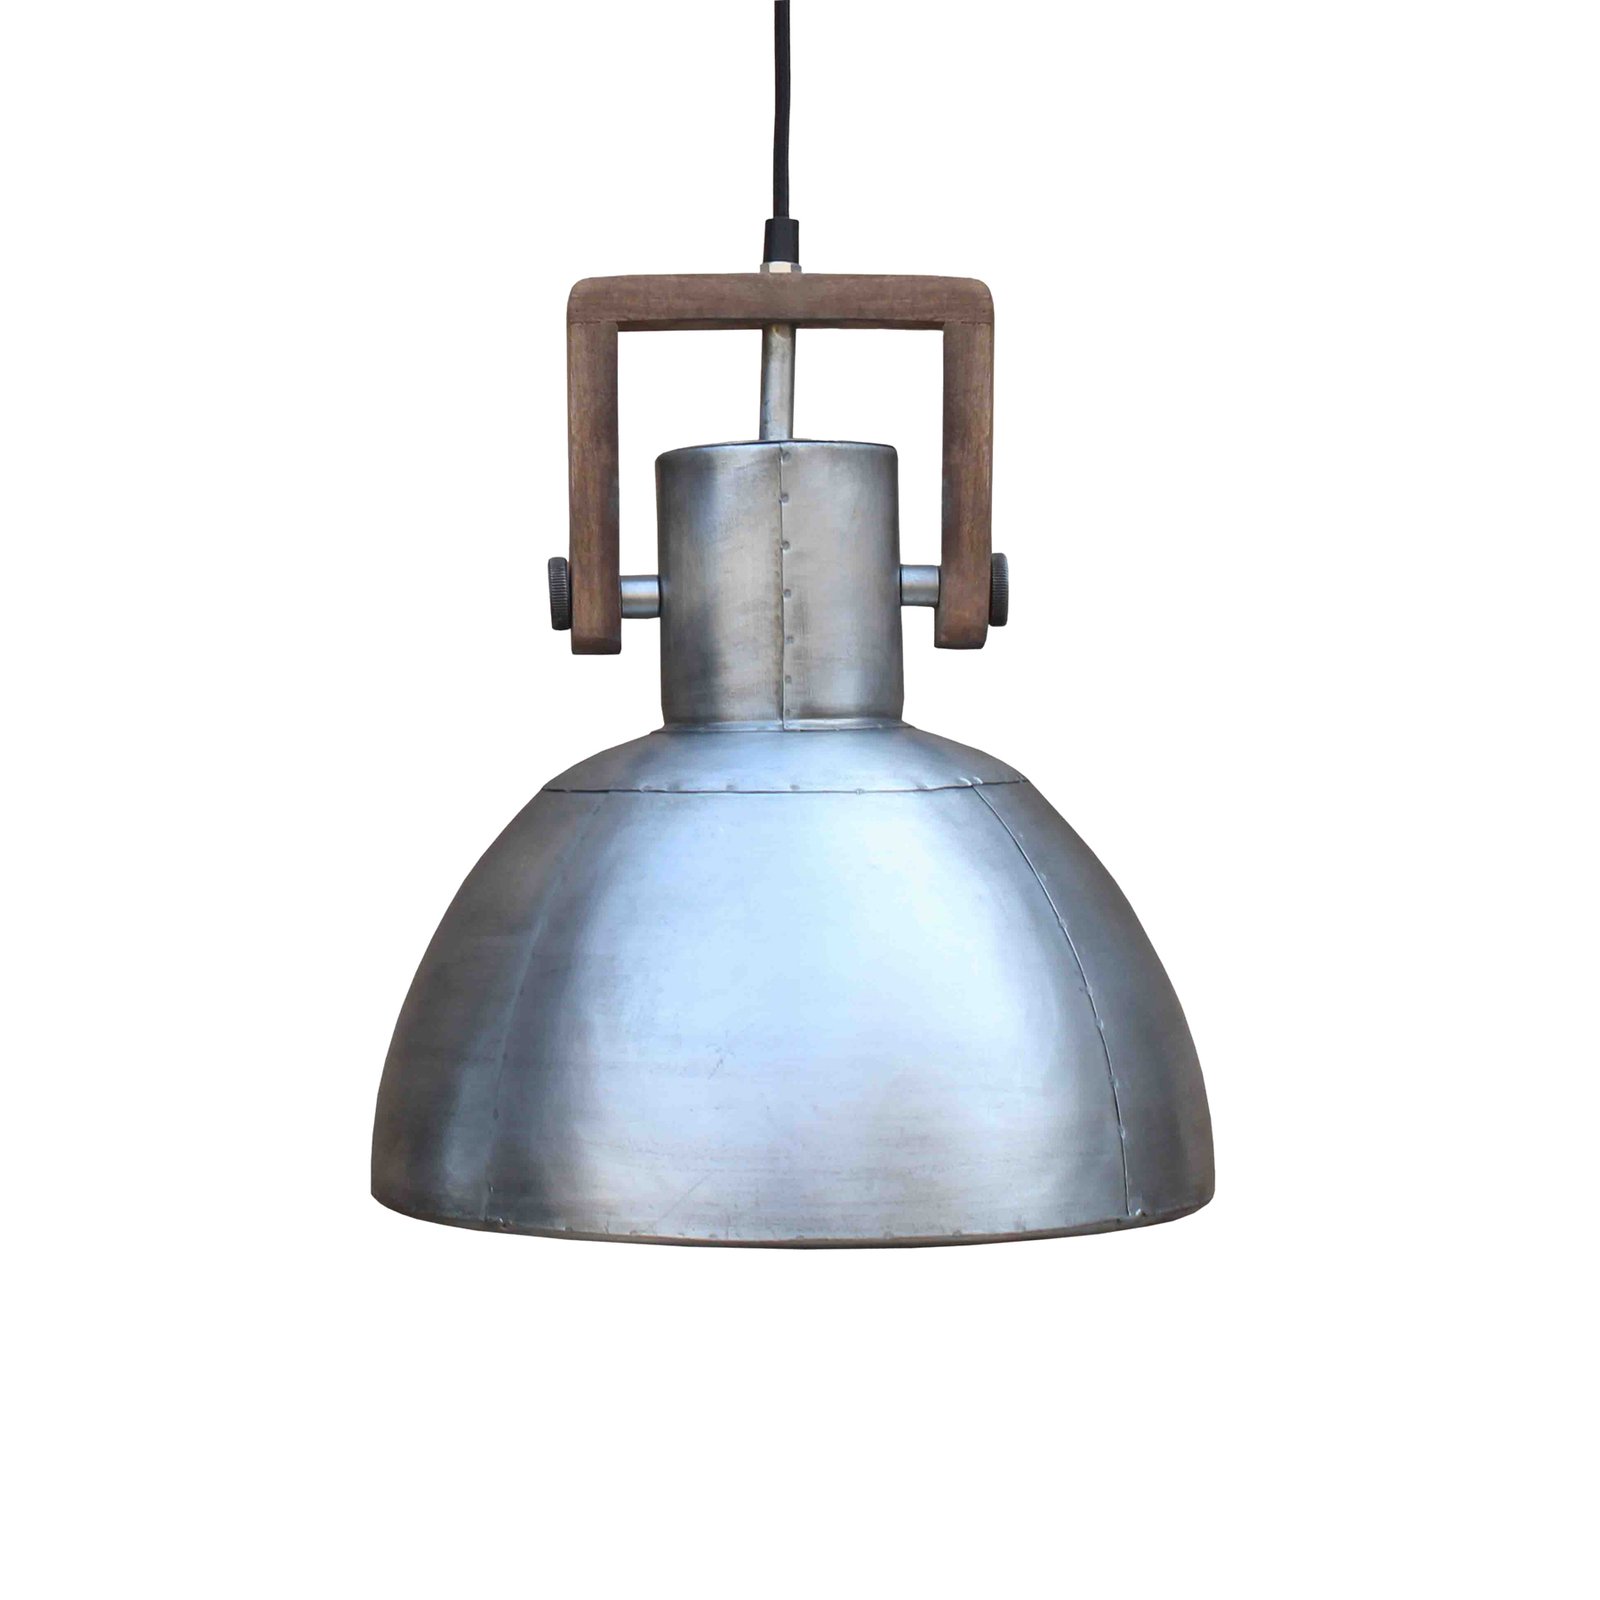 PR Home Ashby Single hanglamp Ø29cm zilver